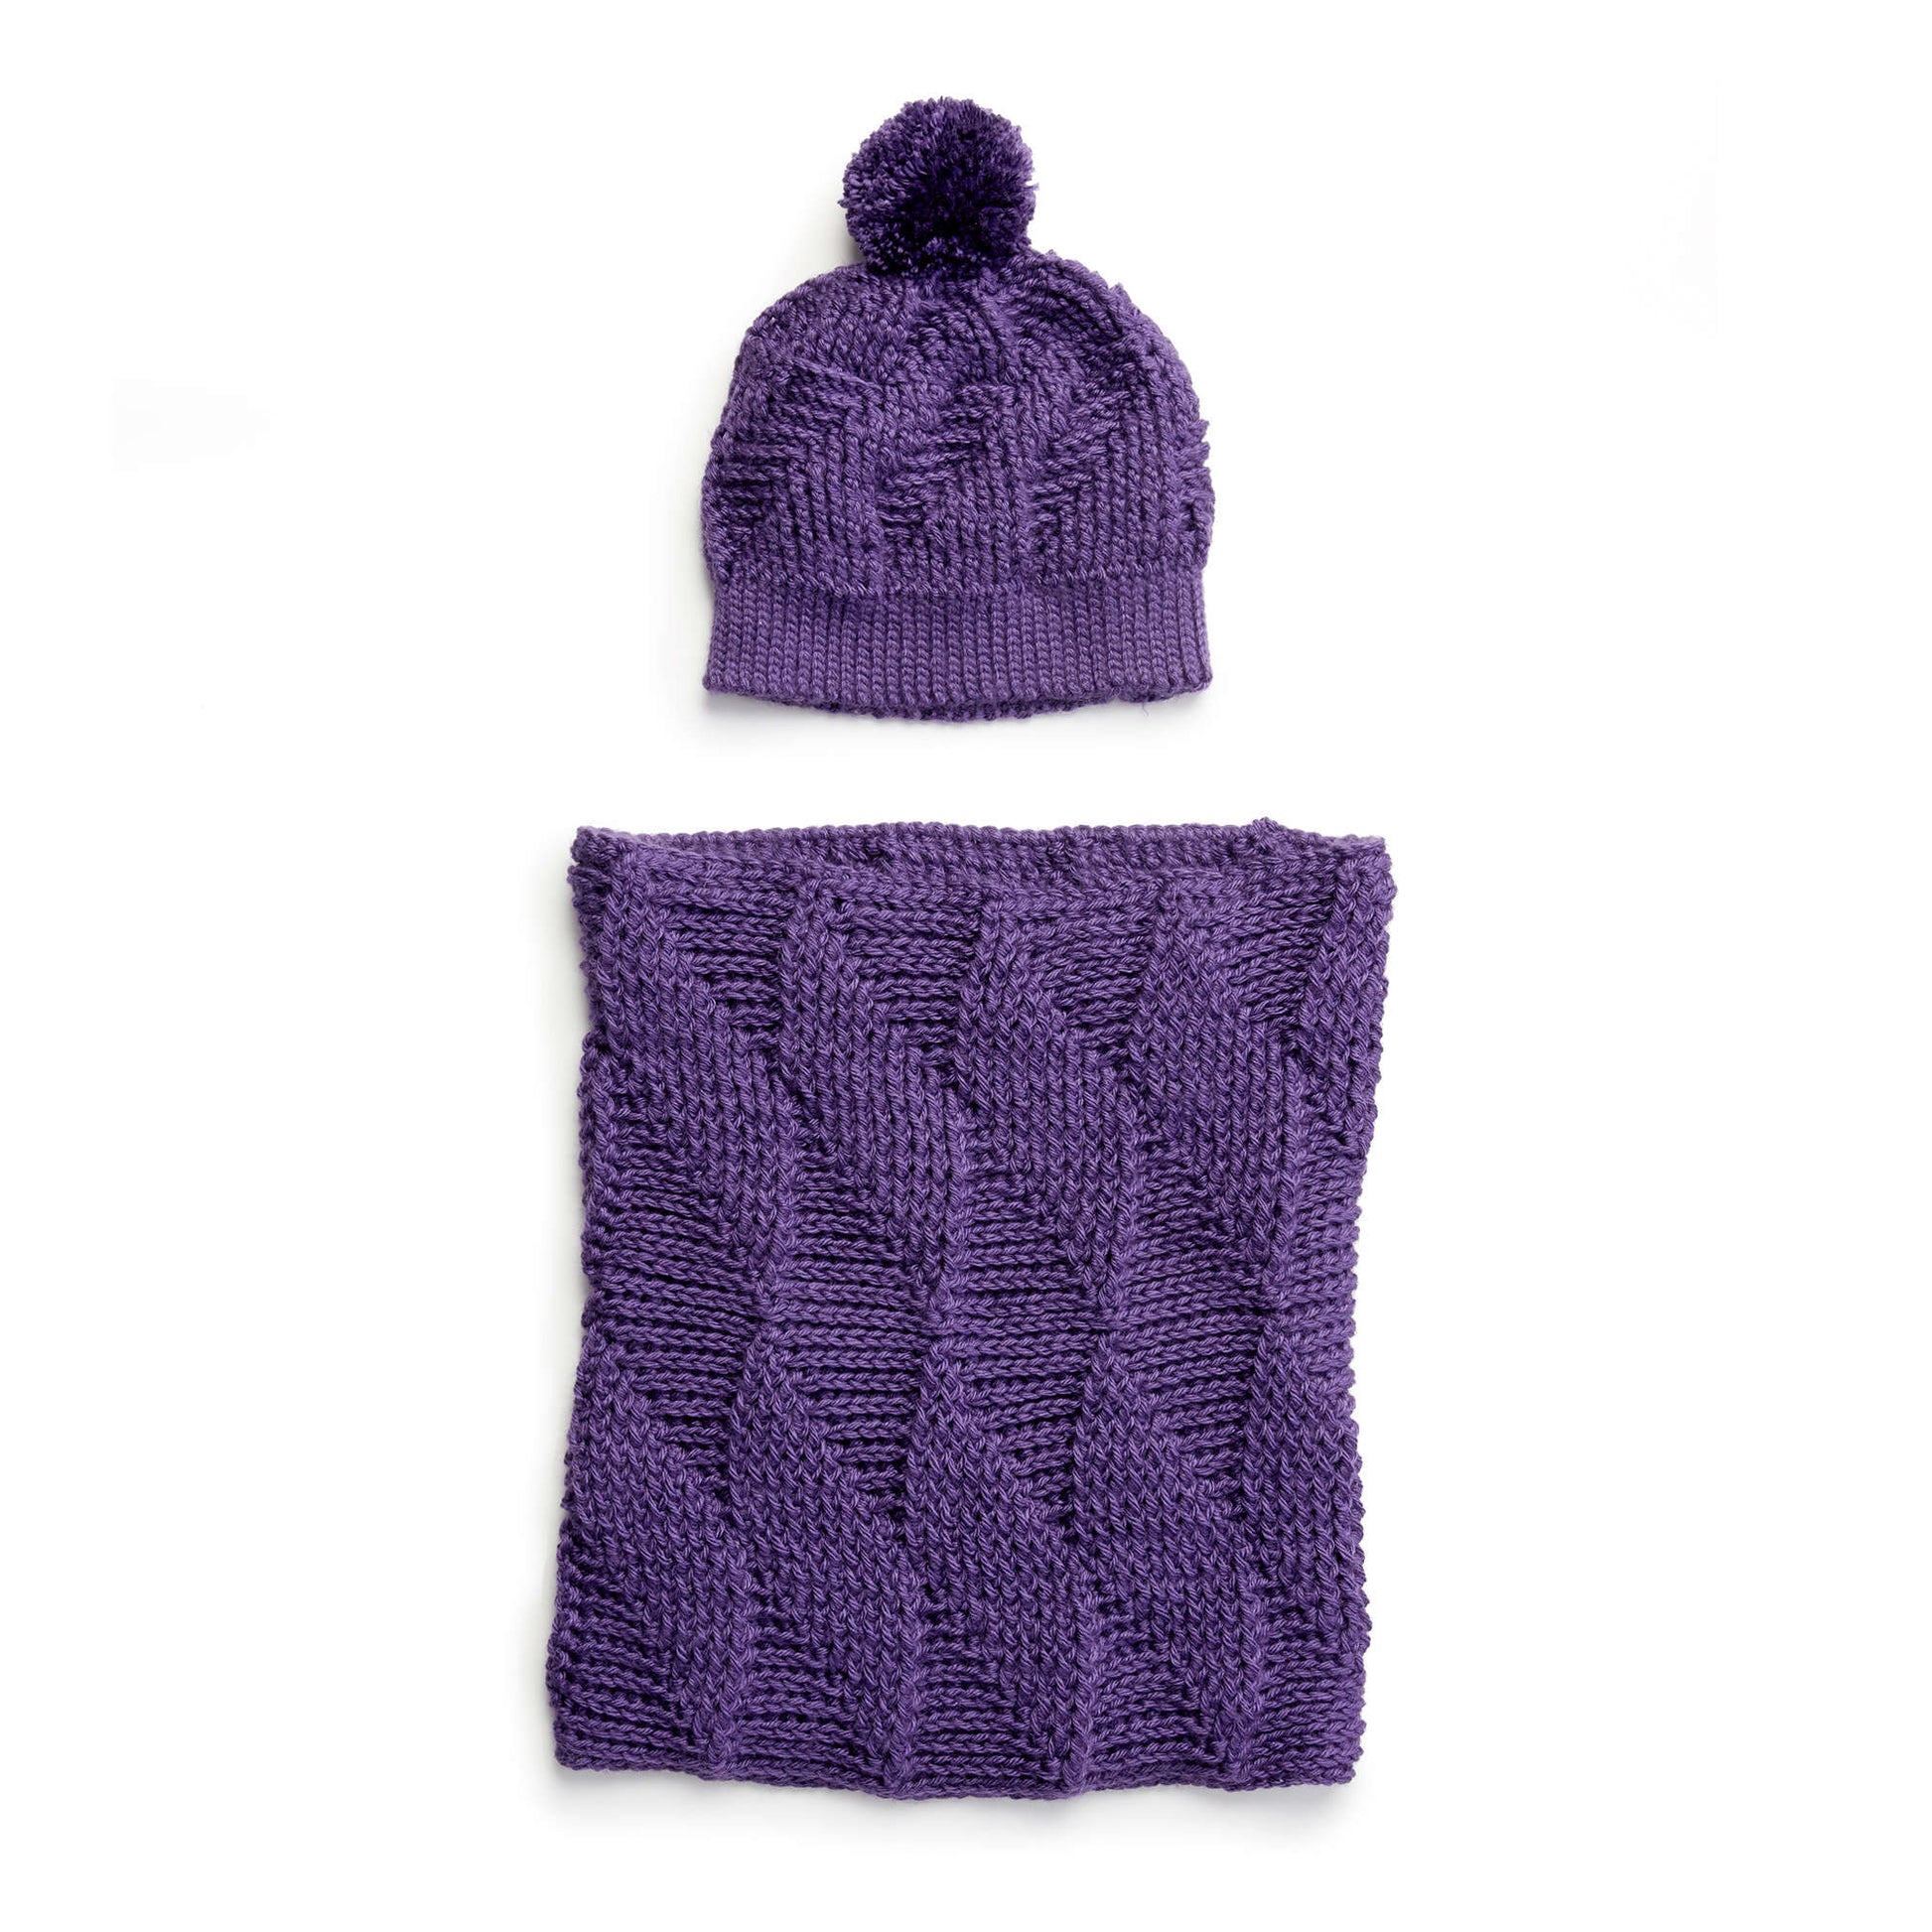 Free Caron Twist 'n' Shout Crochet Hat and Cowl Pattern